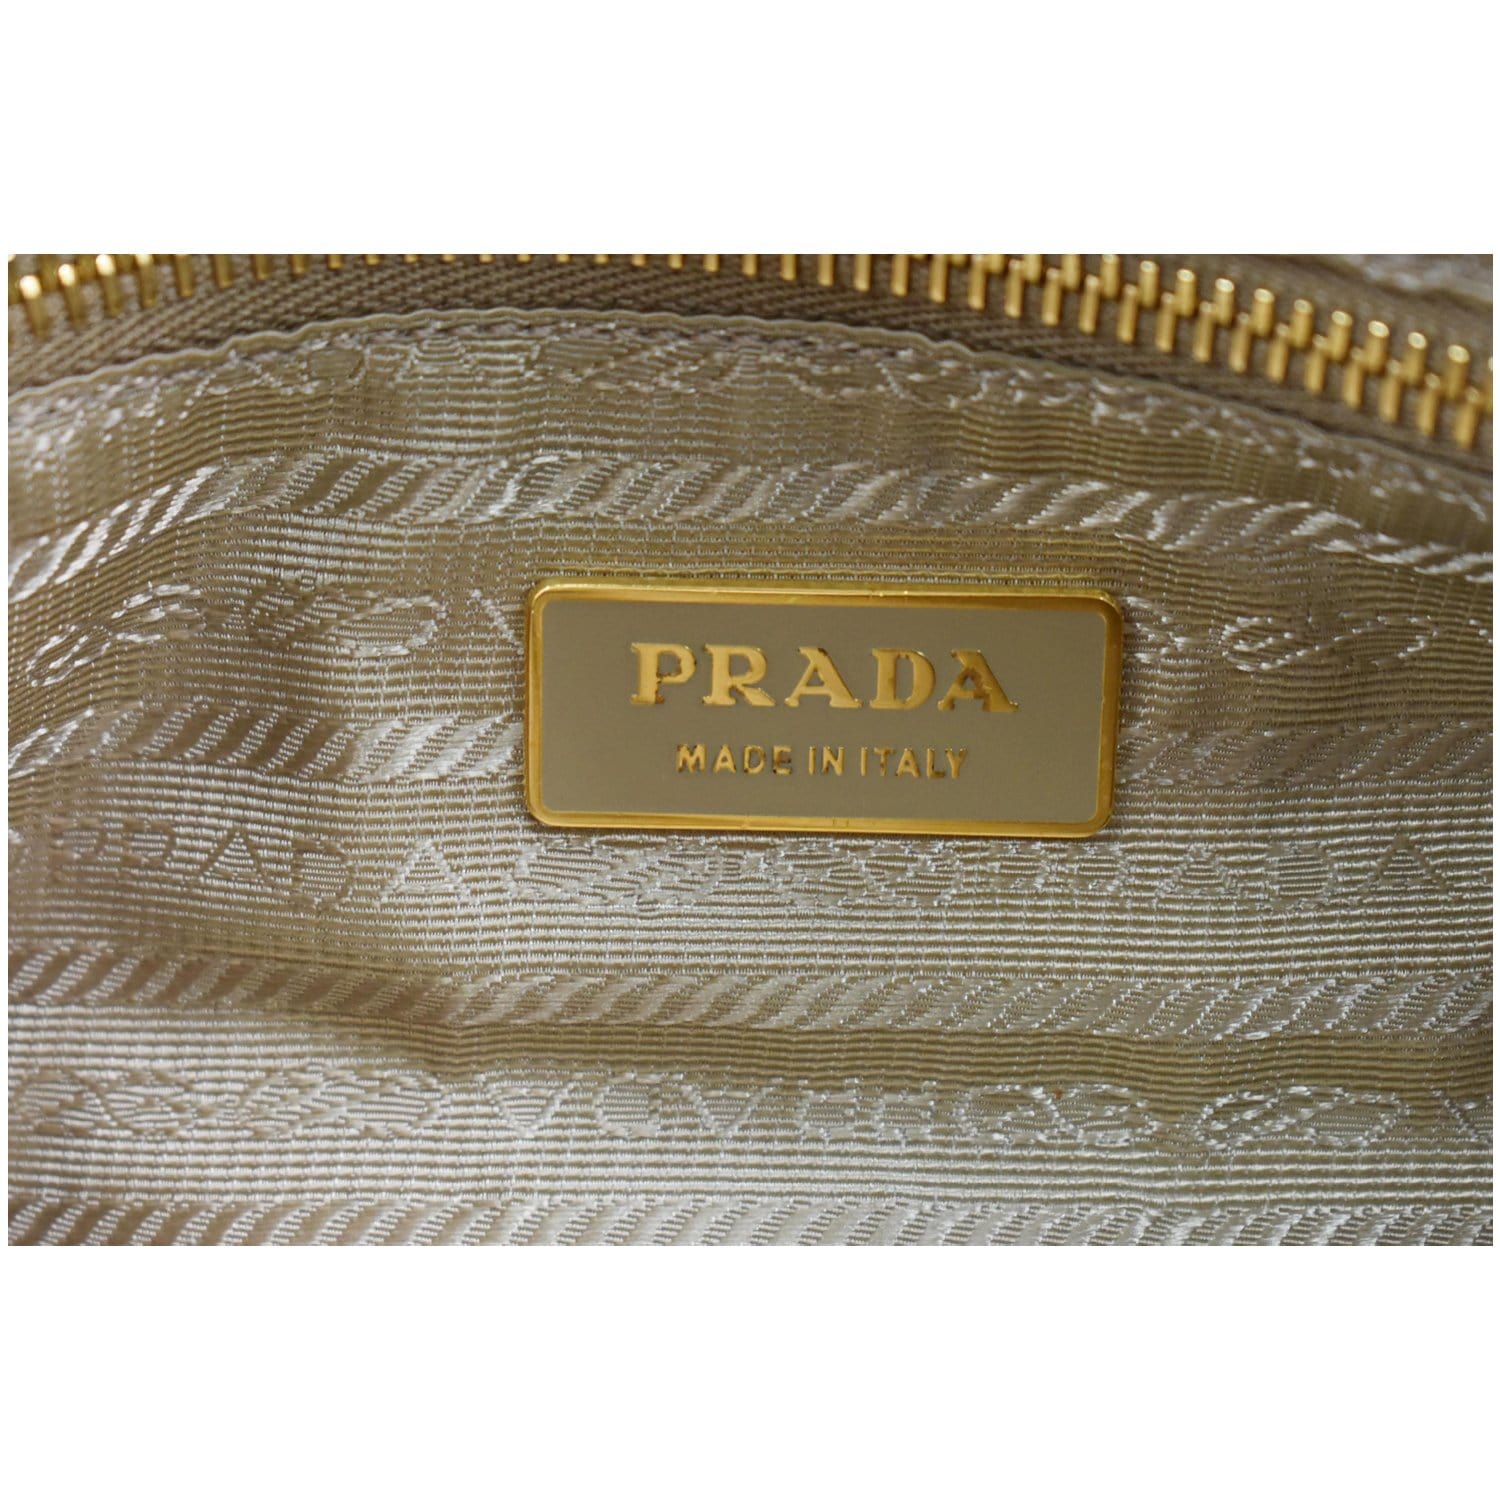 Prada Perforated Leather Wristlet Clutch Bag